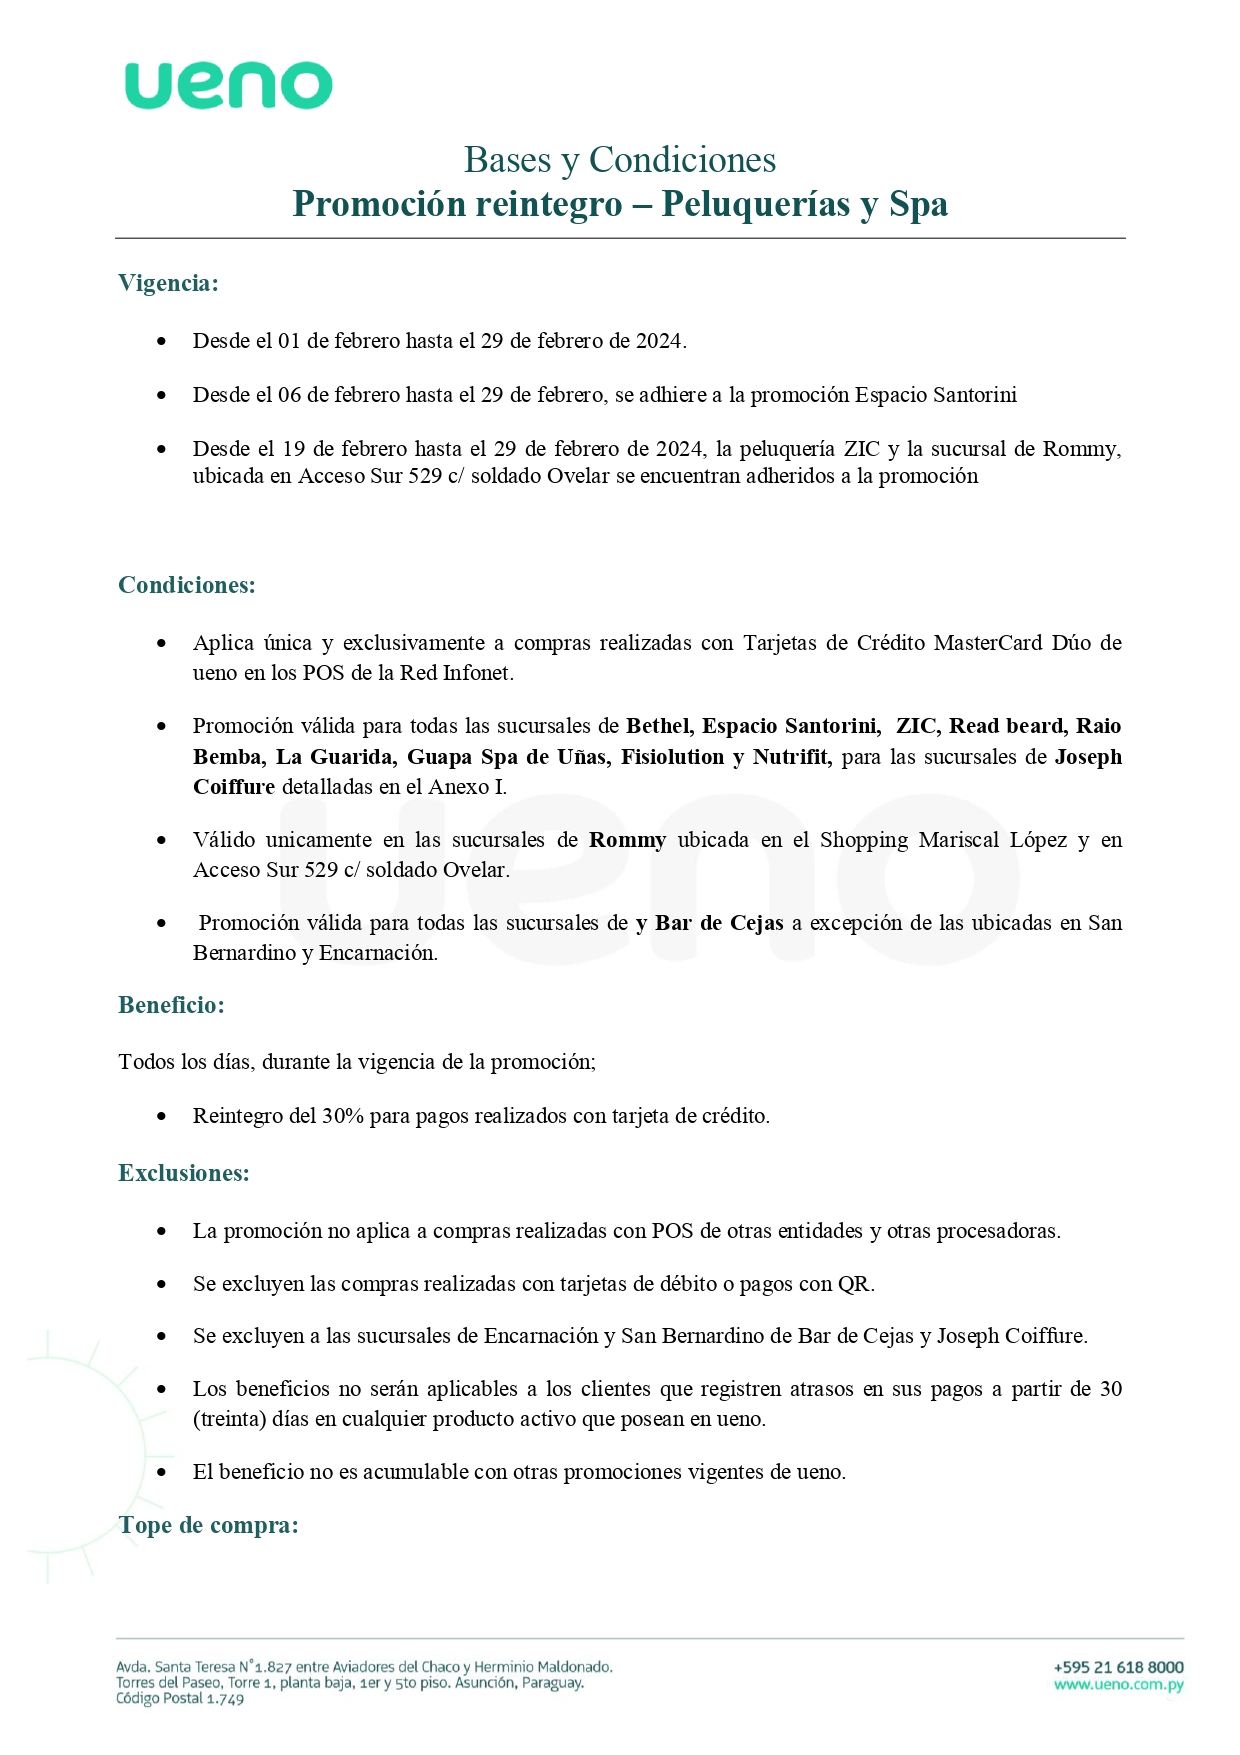 ByC - PELU Y SPA FEBRERO 2024 (REV) (1) (2)_page-0001.jpg